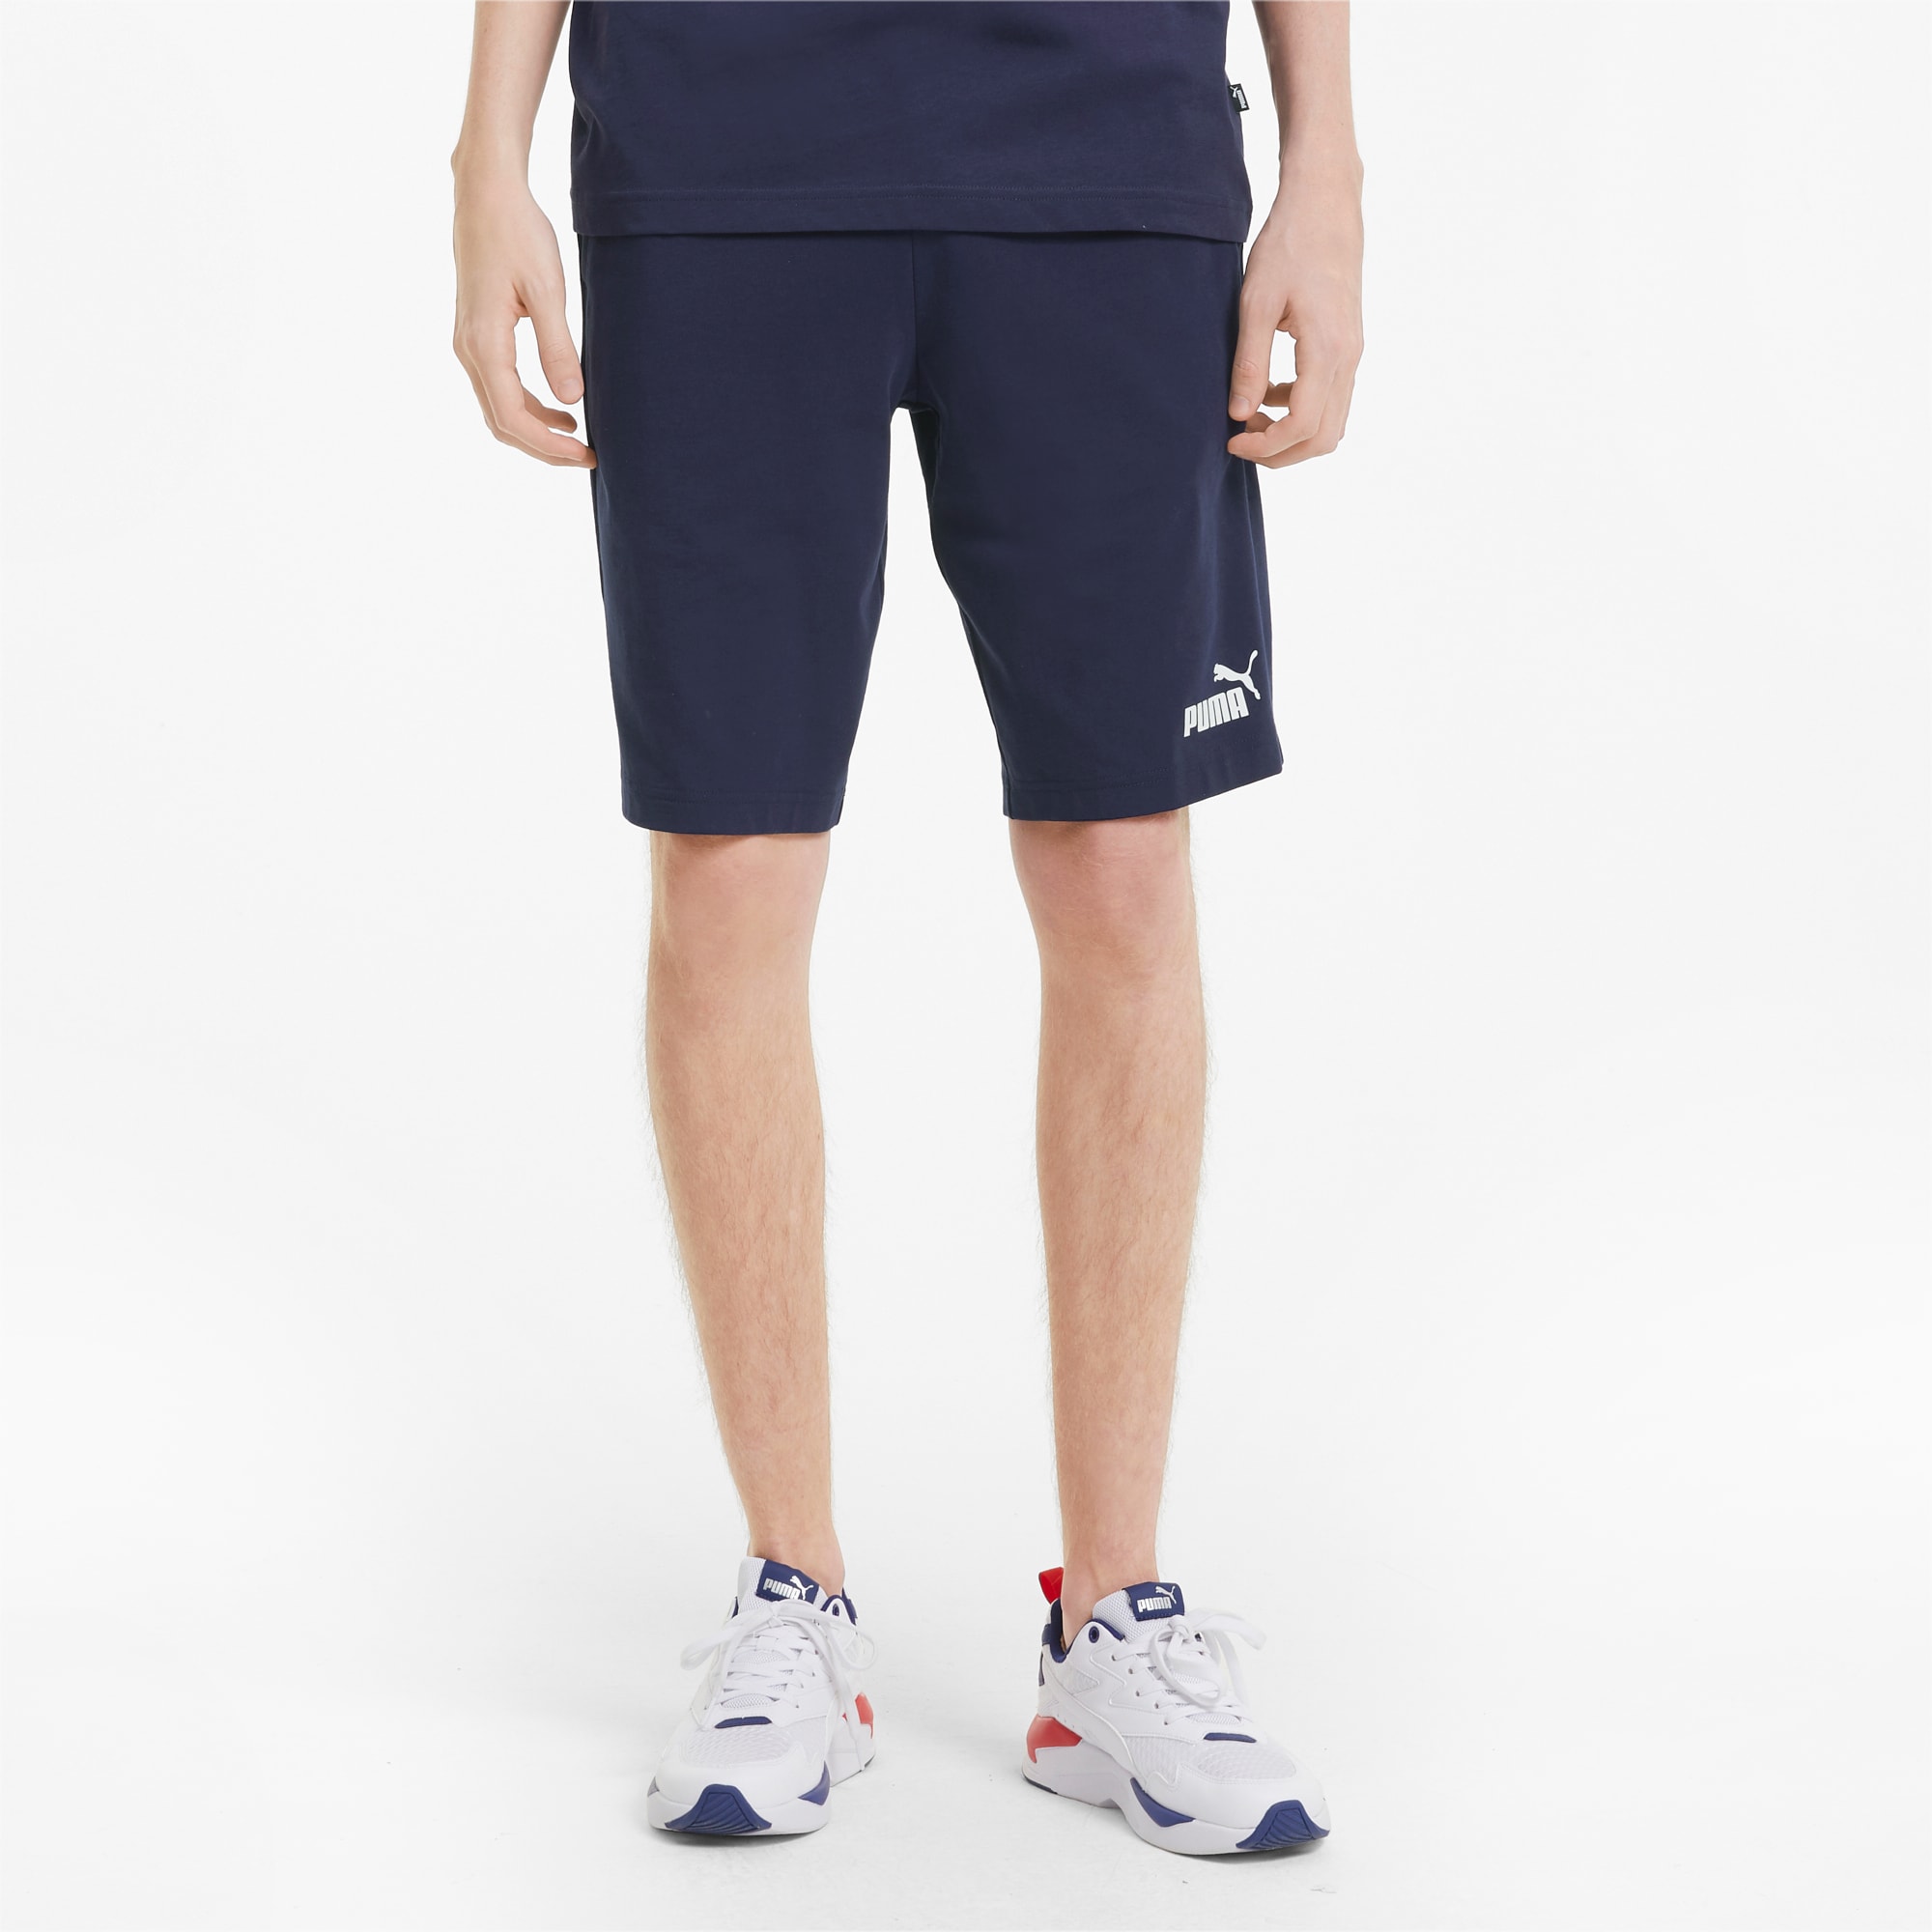 PUMA Essentials Jersey Men's Shorts, Peacoat, Size XS, Clothing